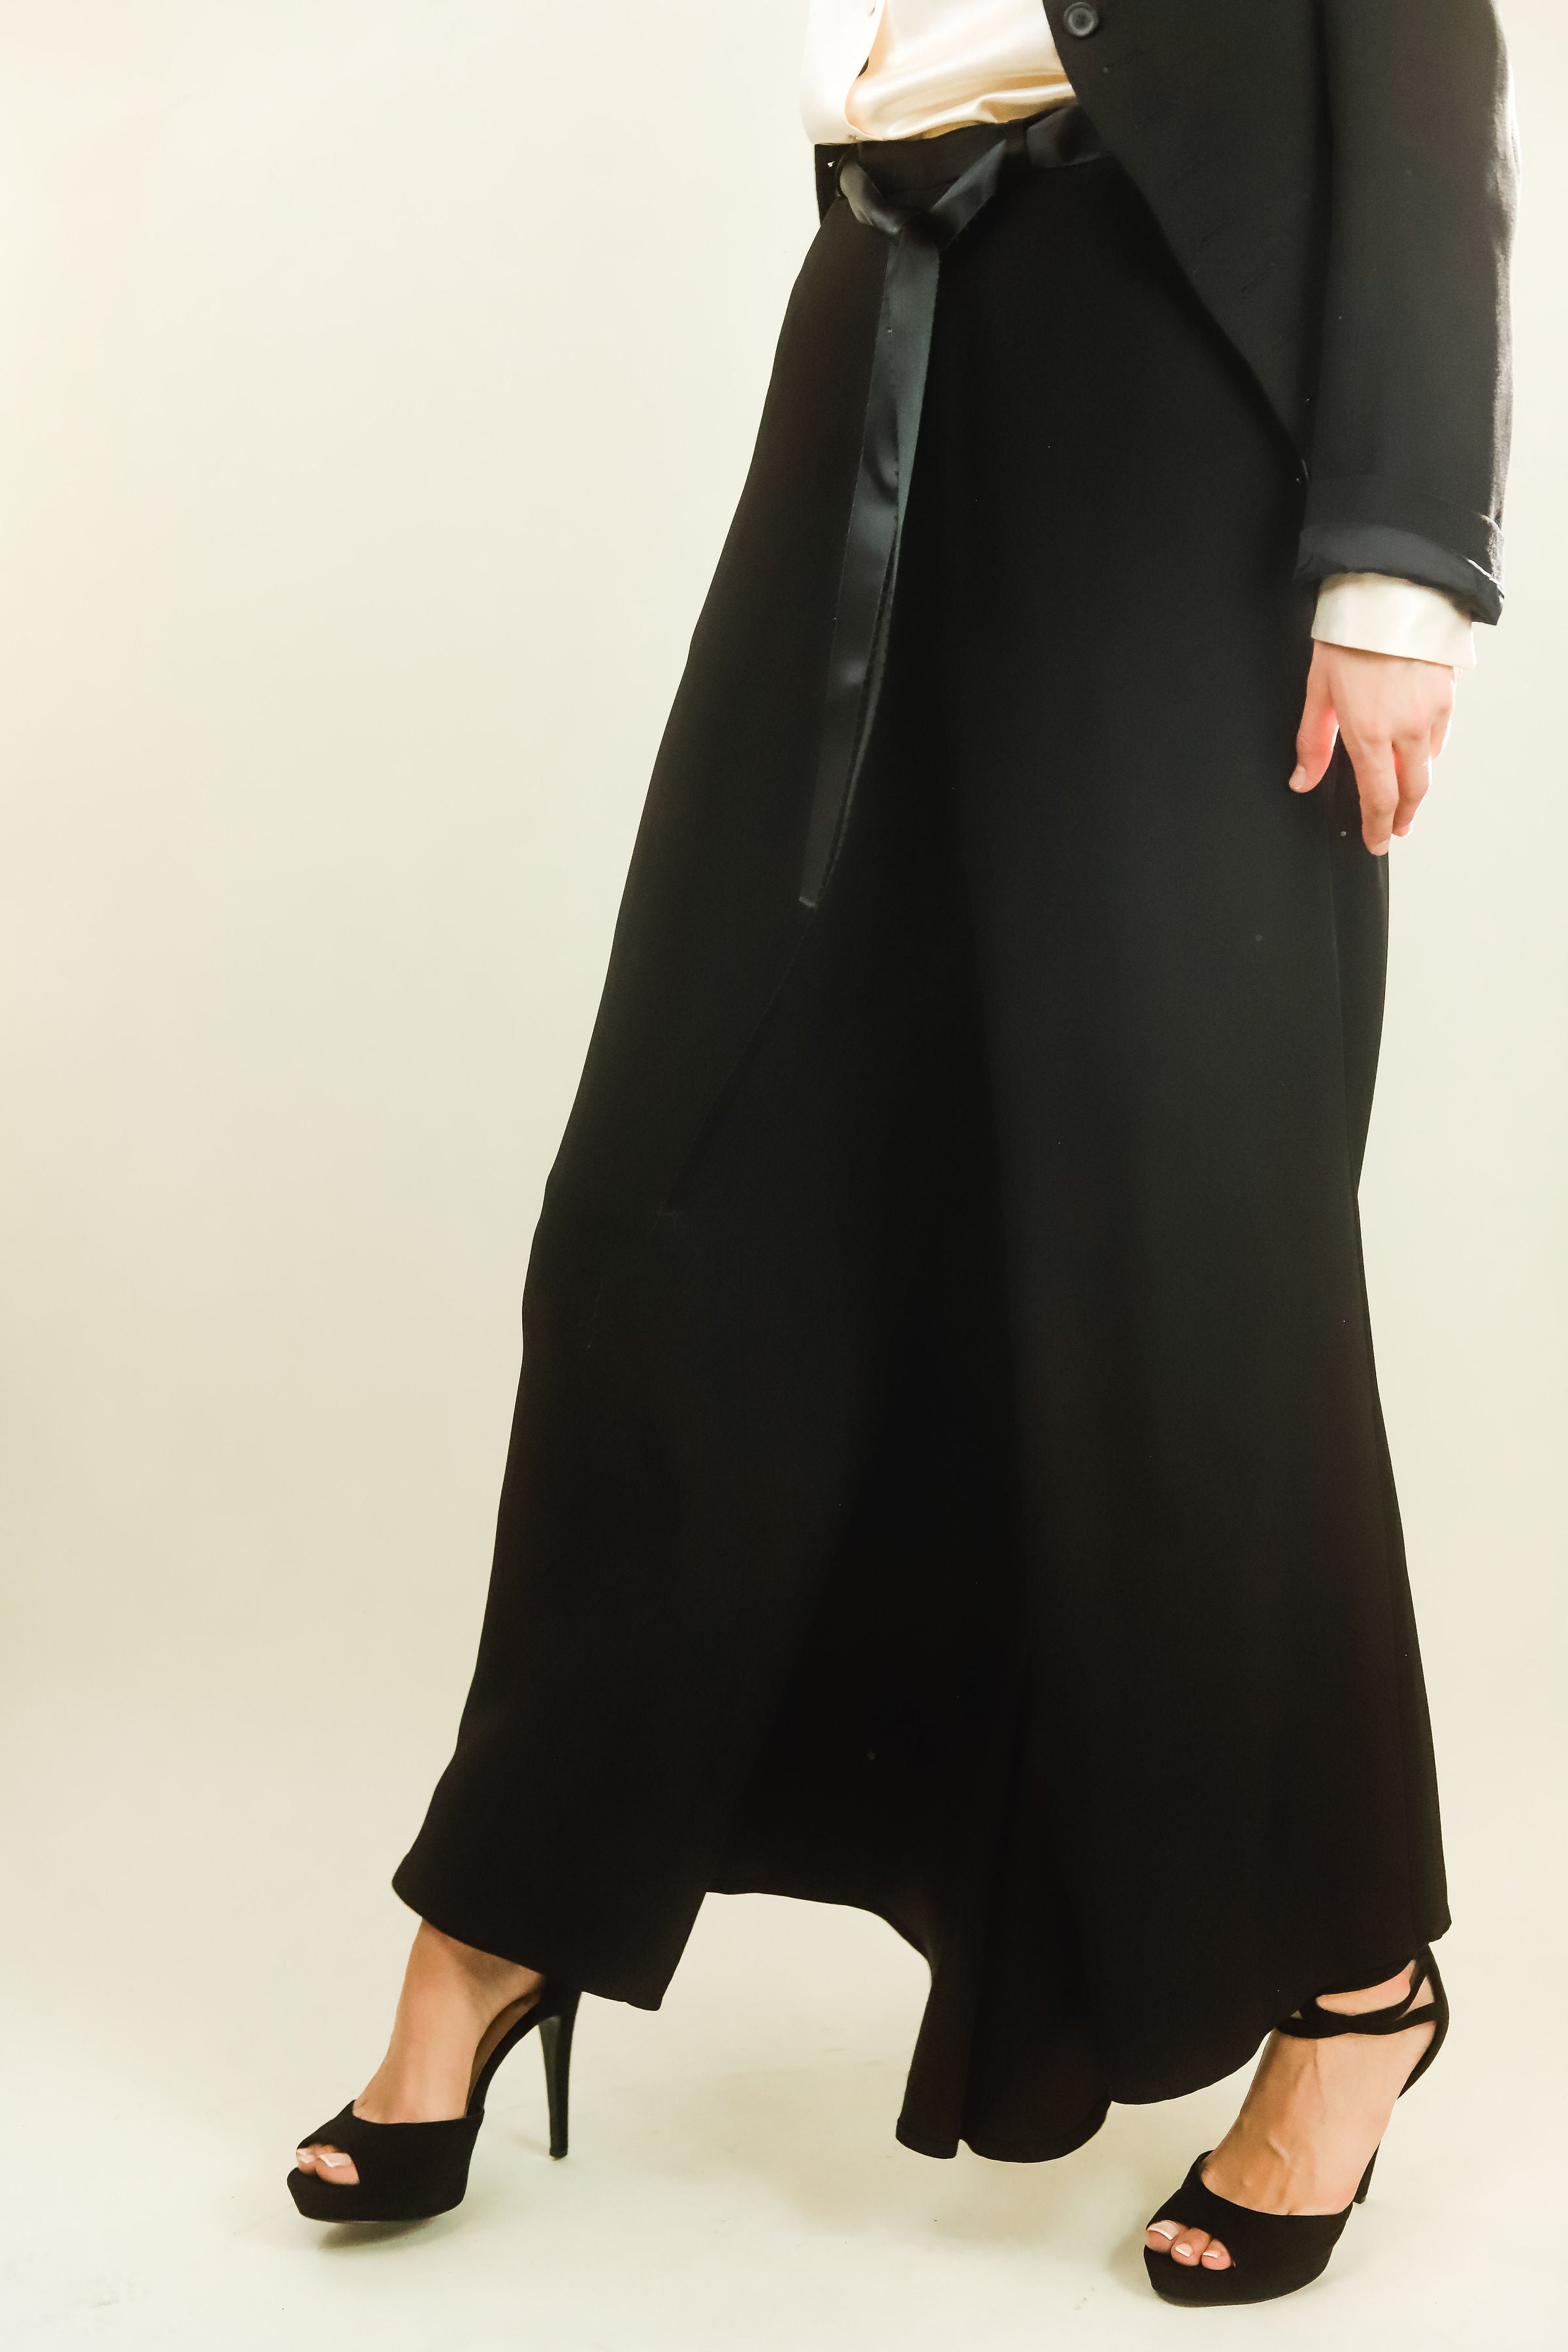 Jean Paul Gaultier Skirt/Pant Trousers